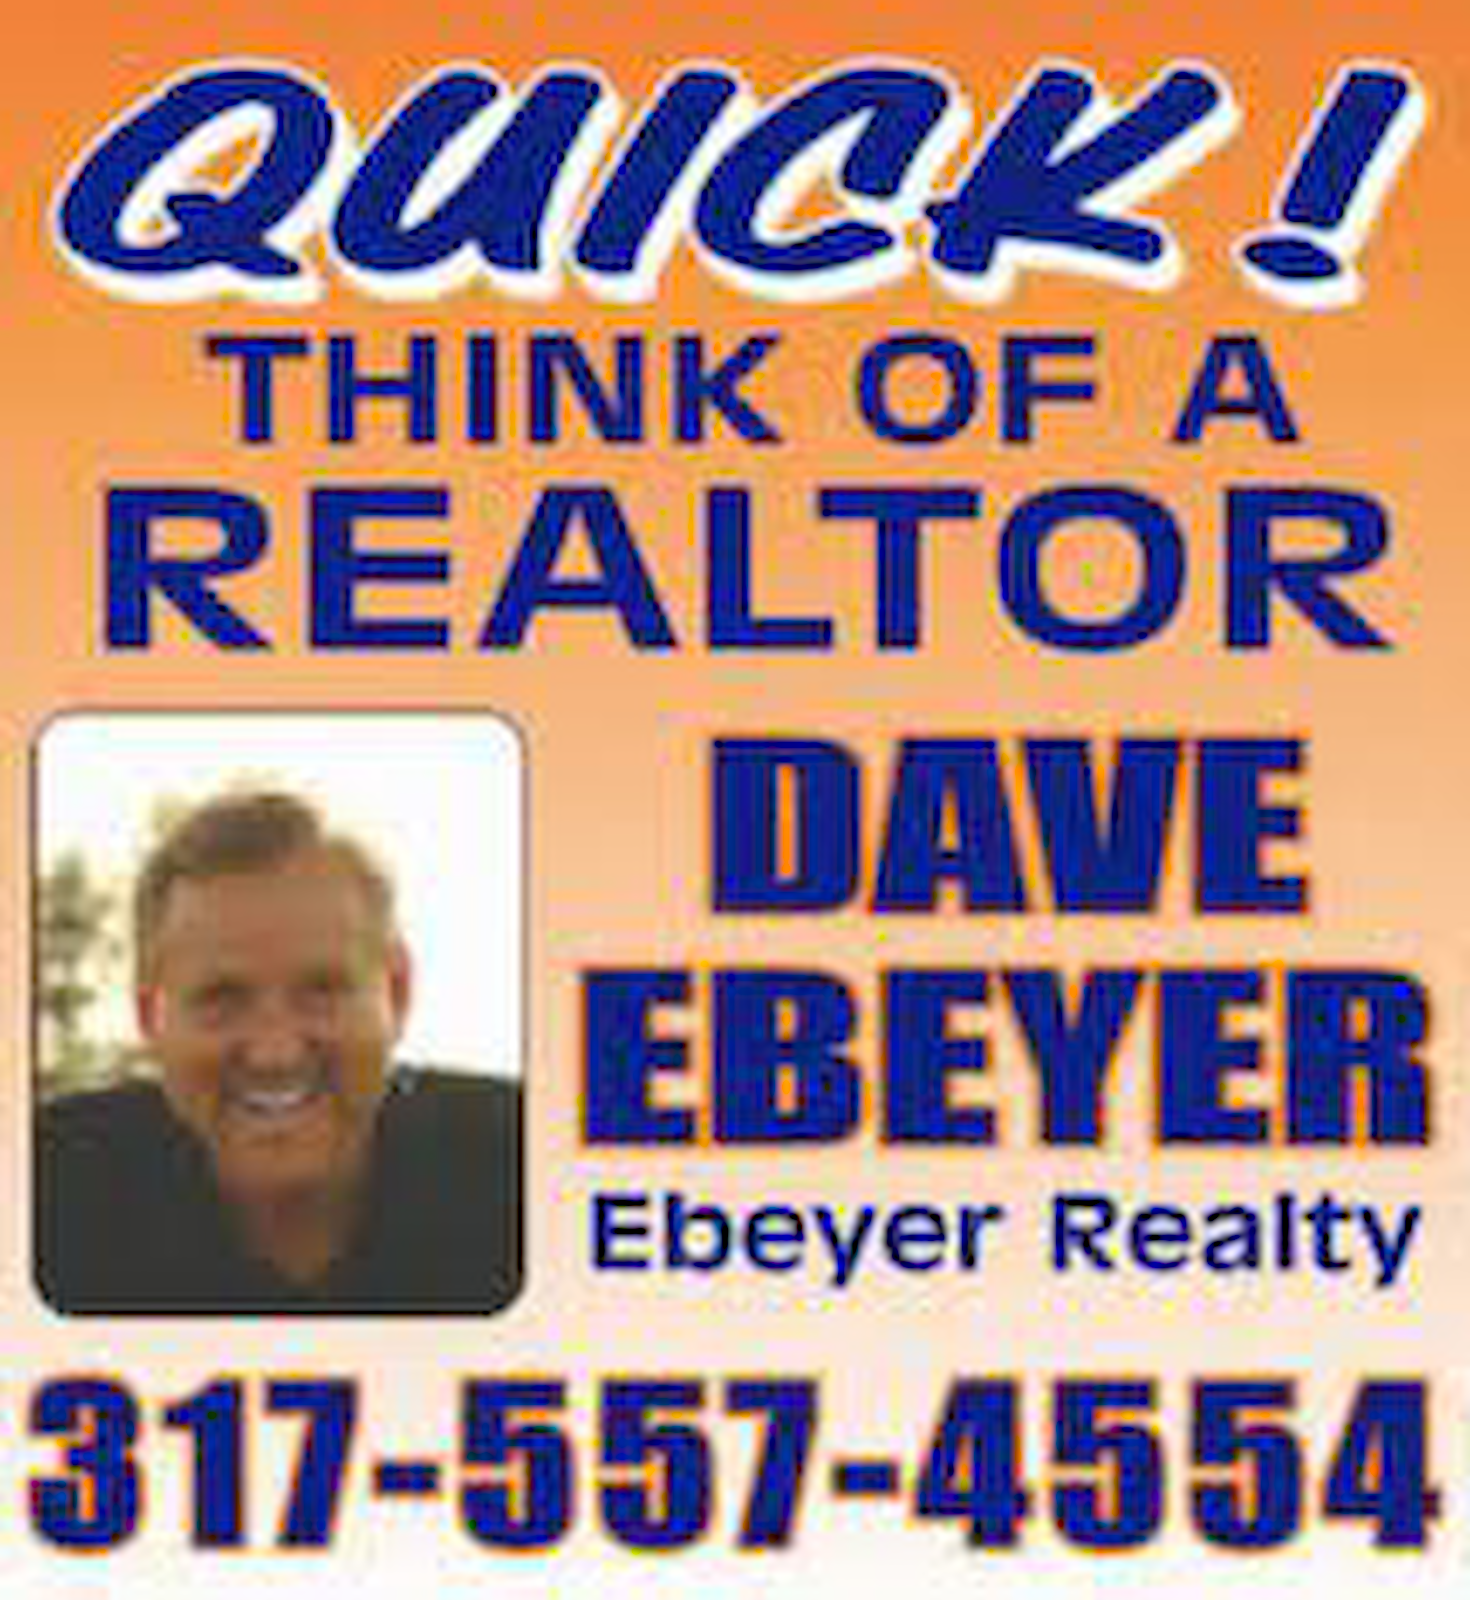 Dave Ebeyer 317-557-4554